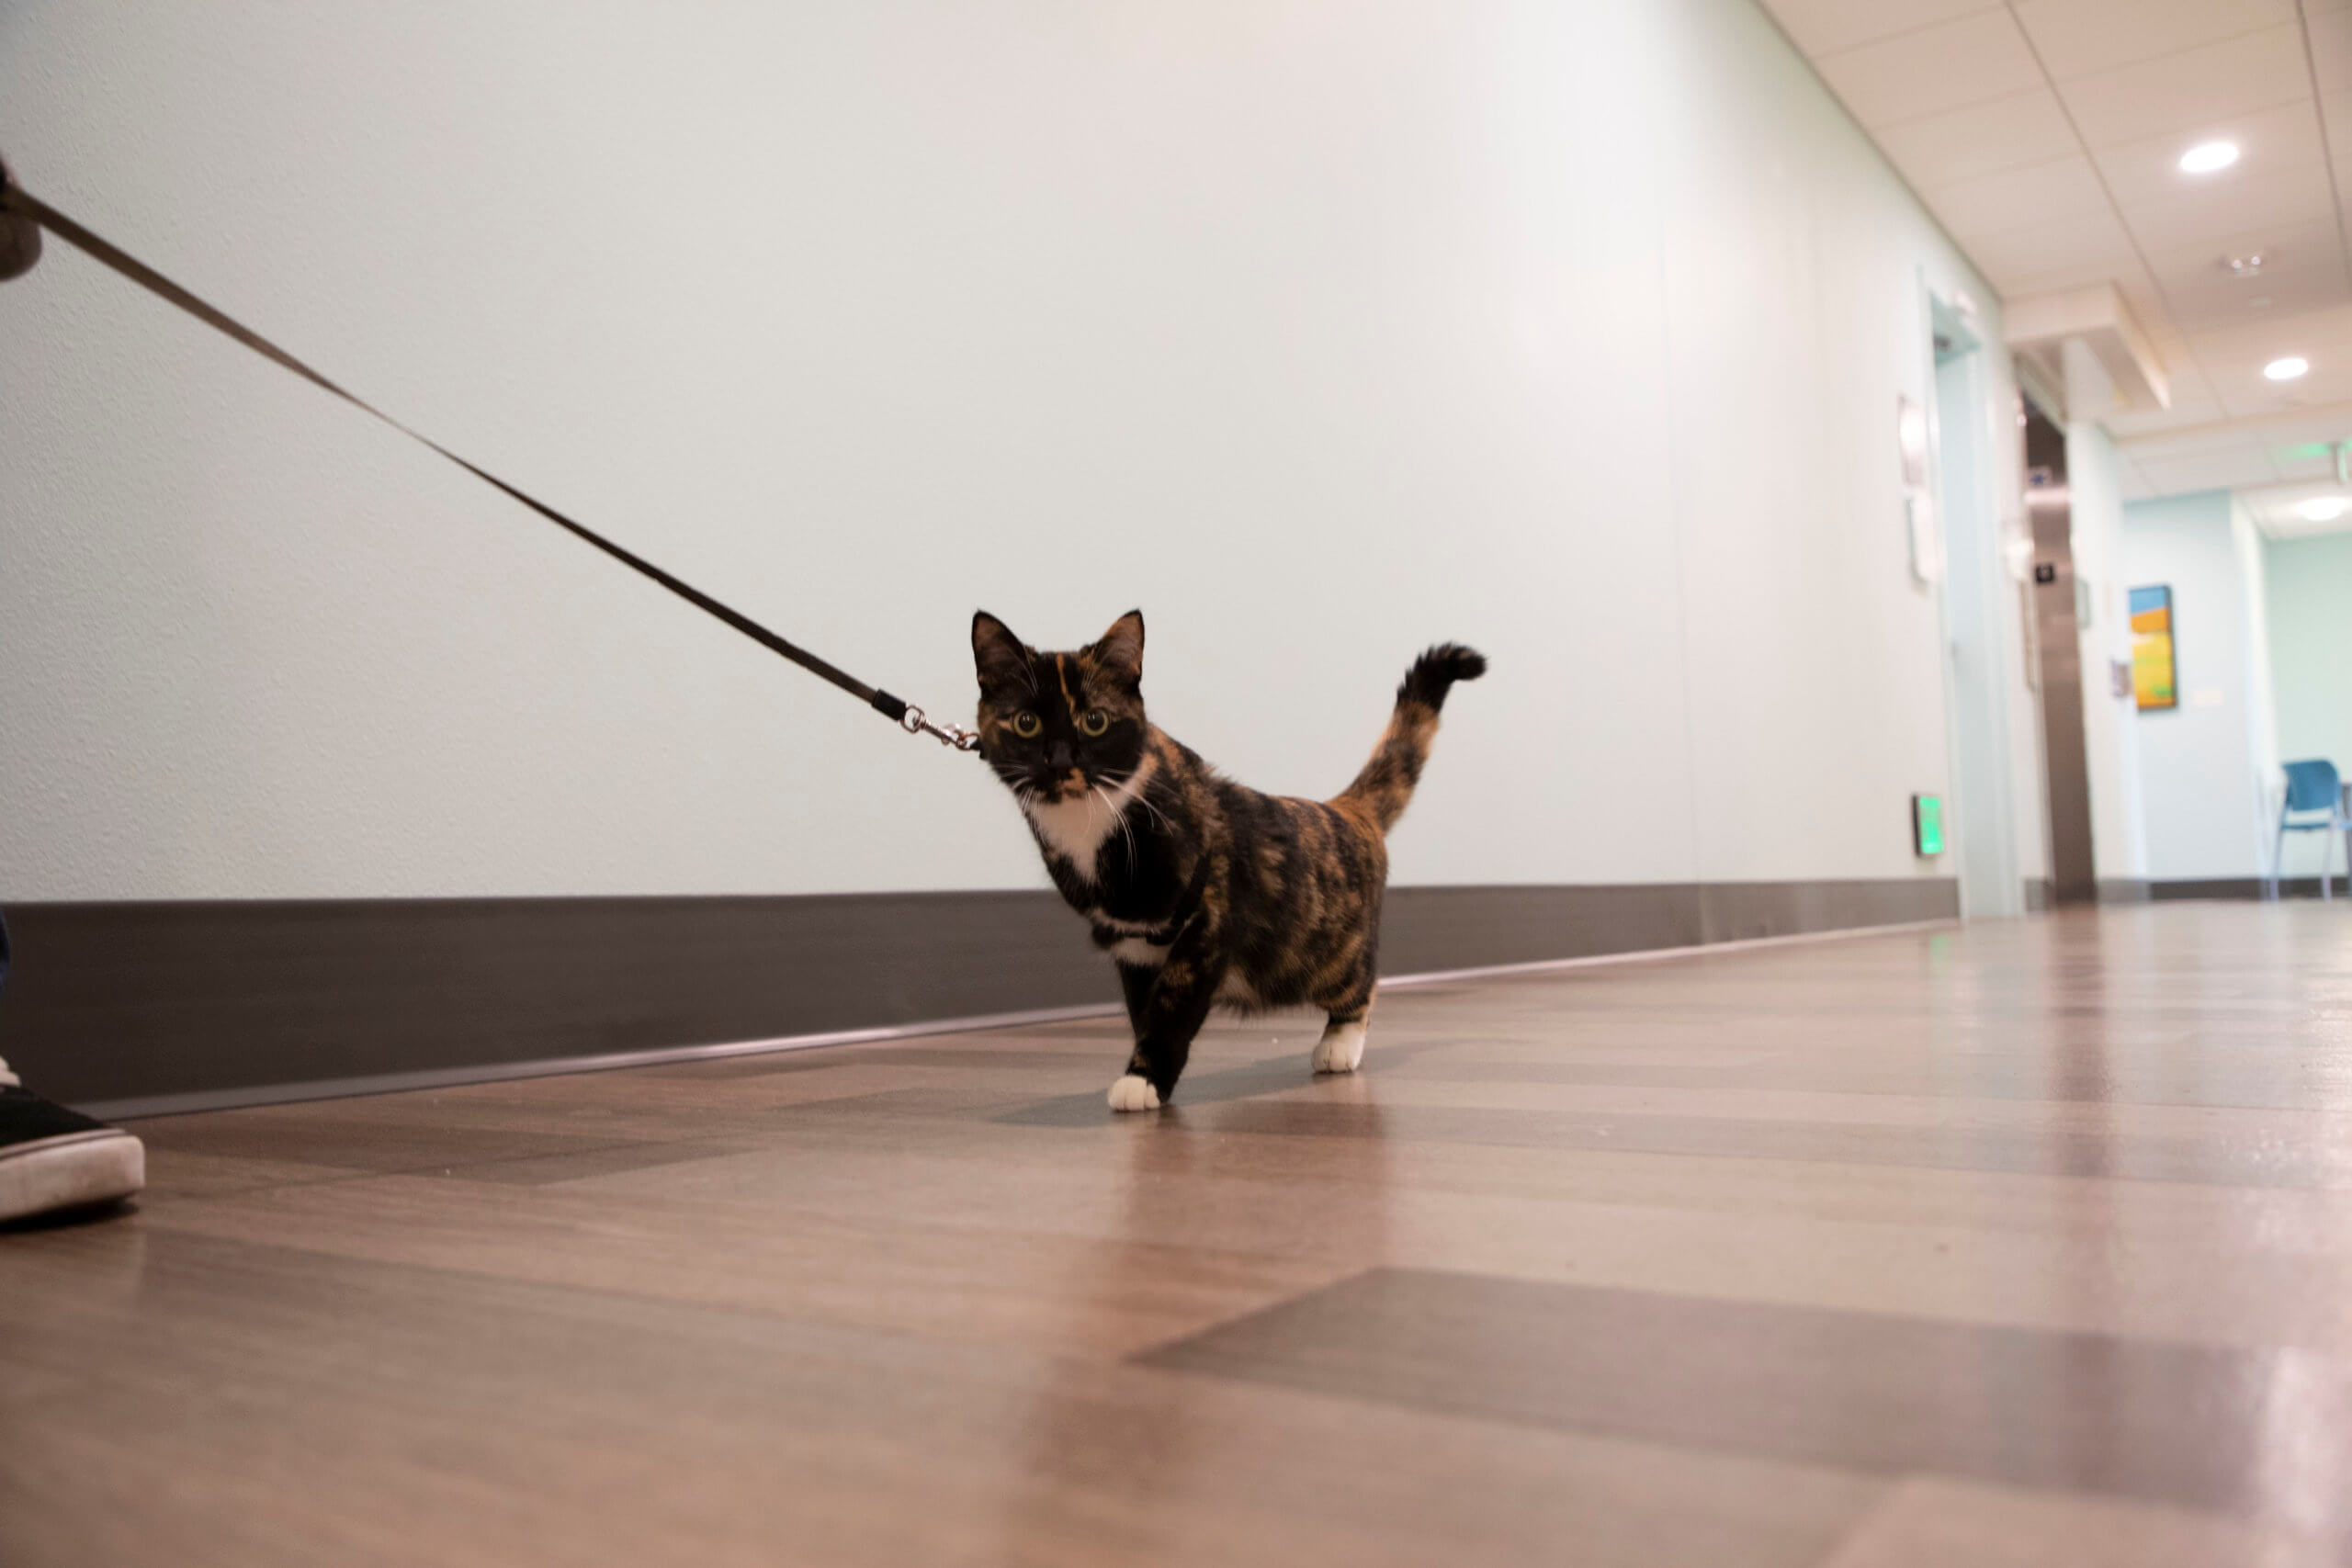 Tortoiseshell cat on leash in hallway